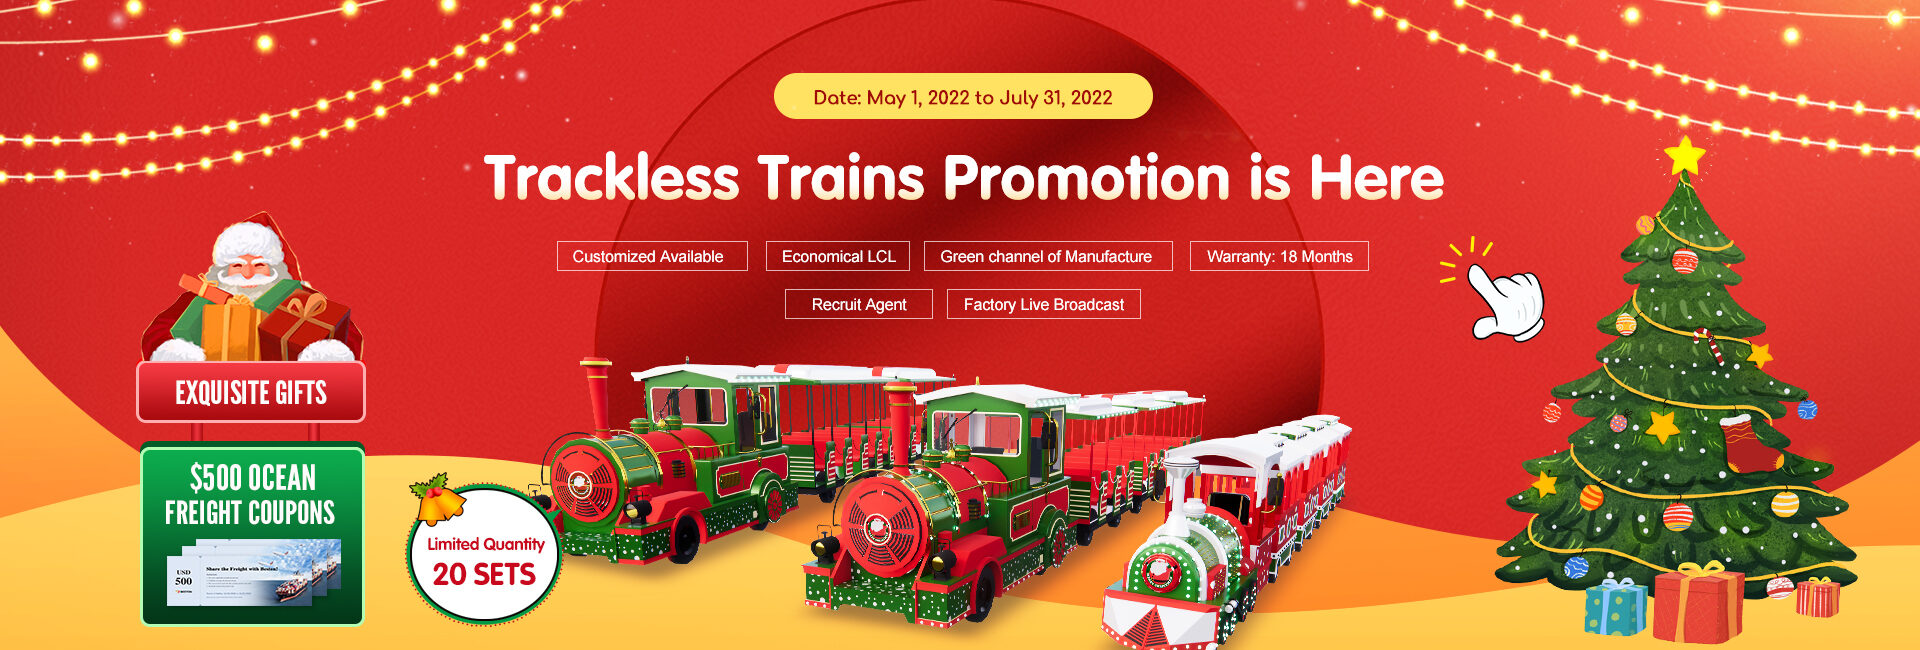 Beston Trackless Train Promotion